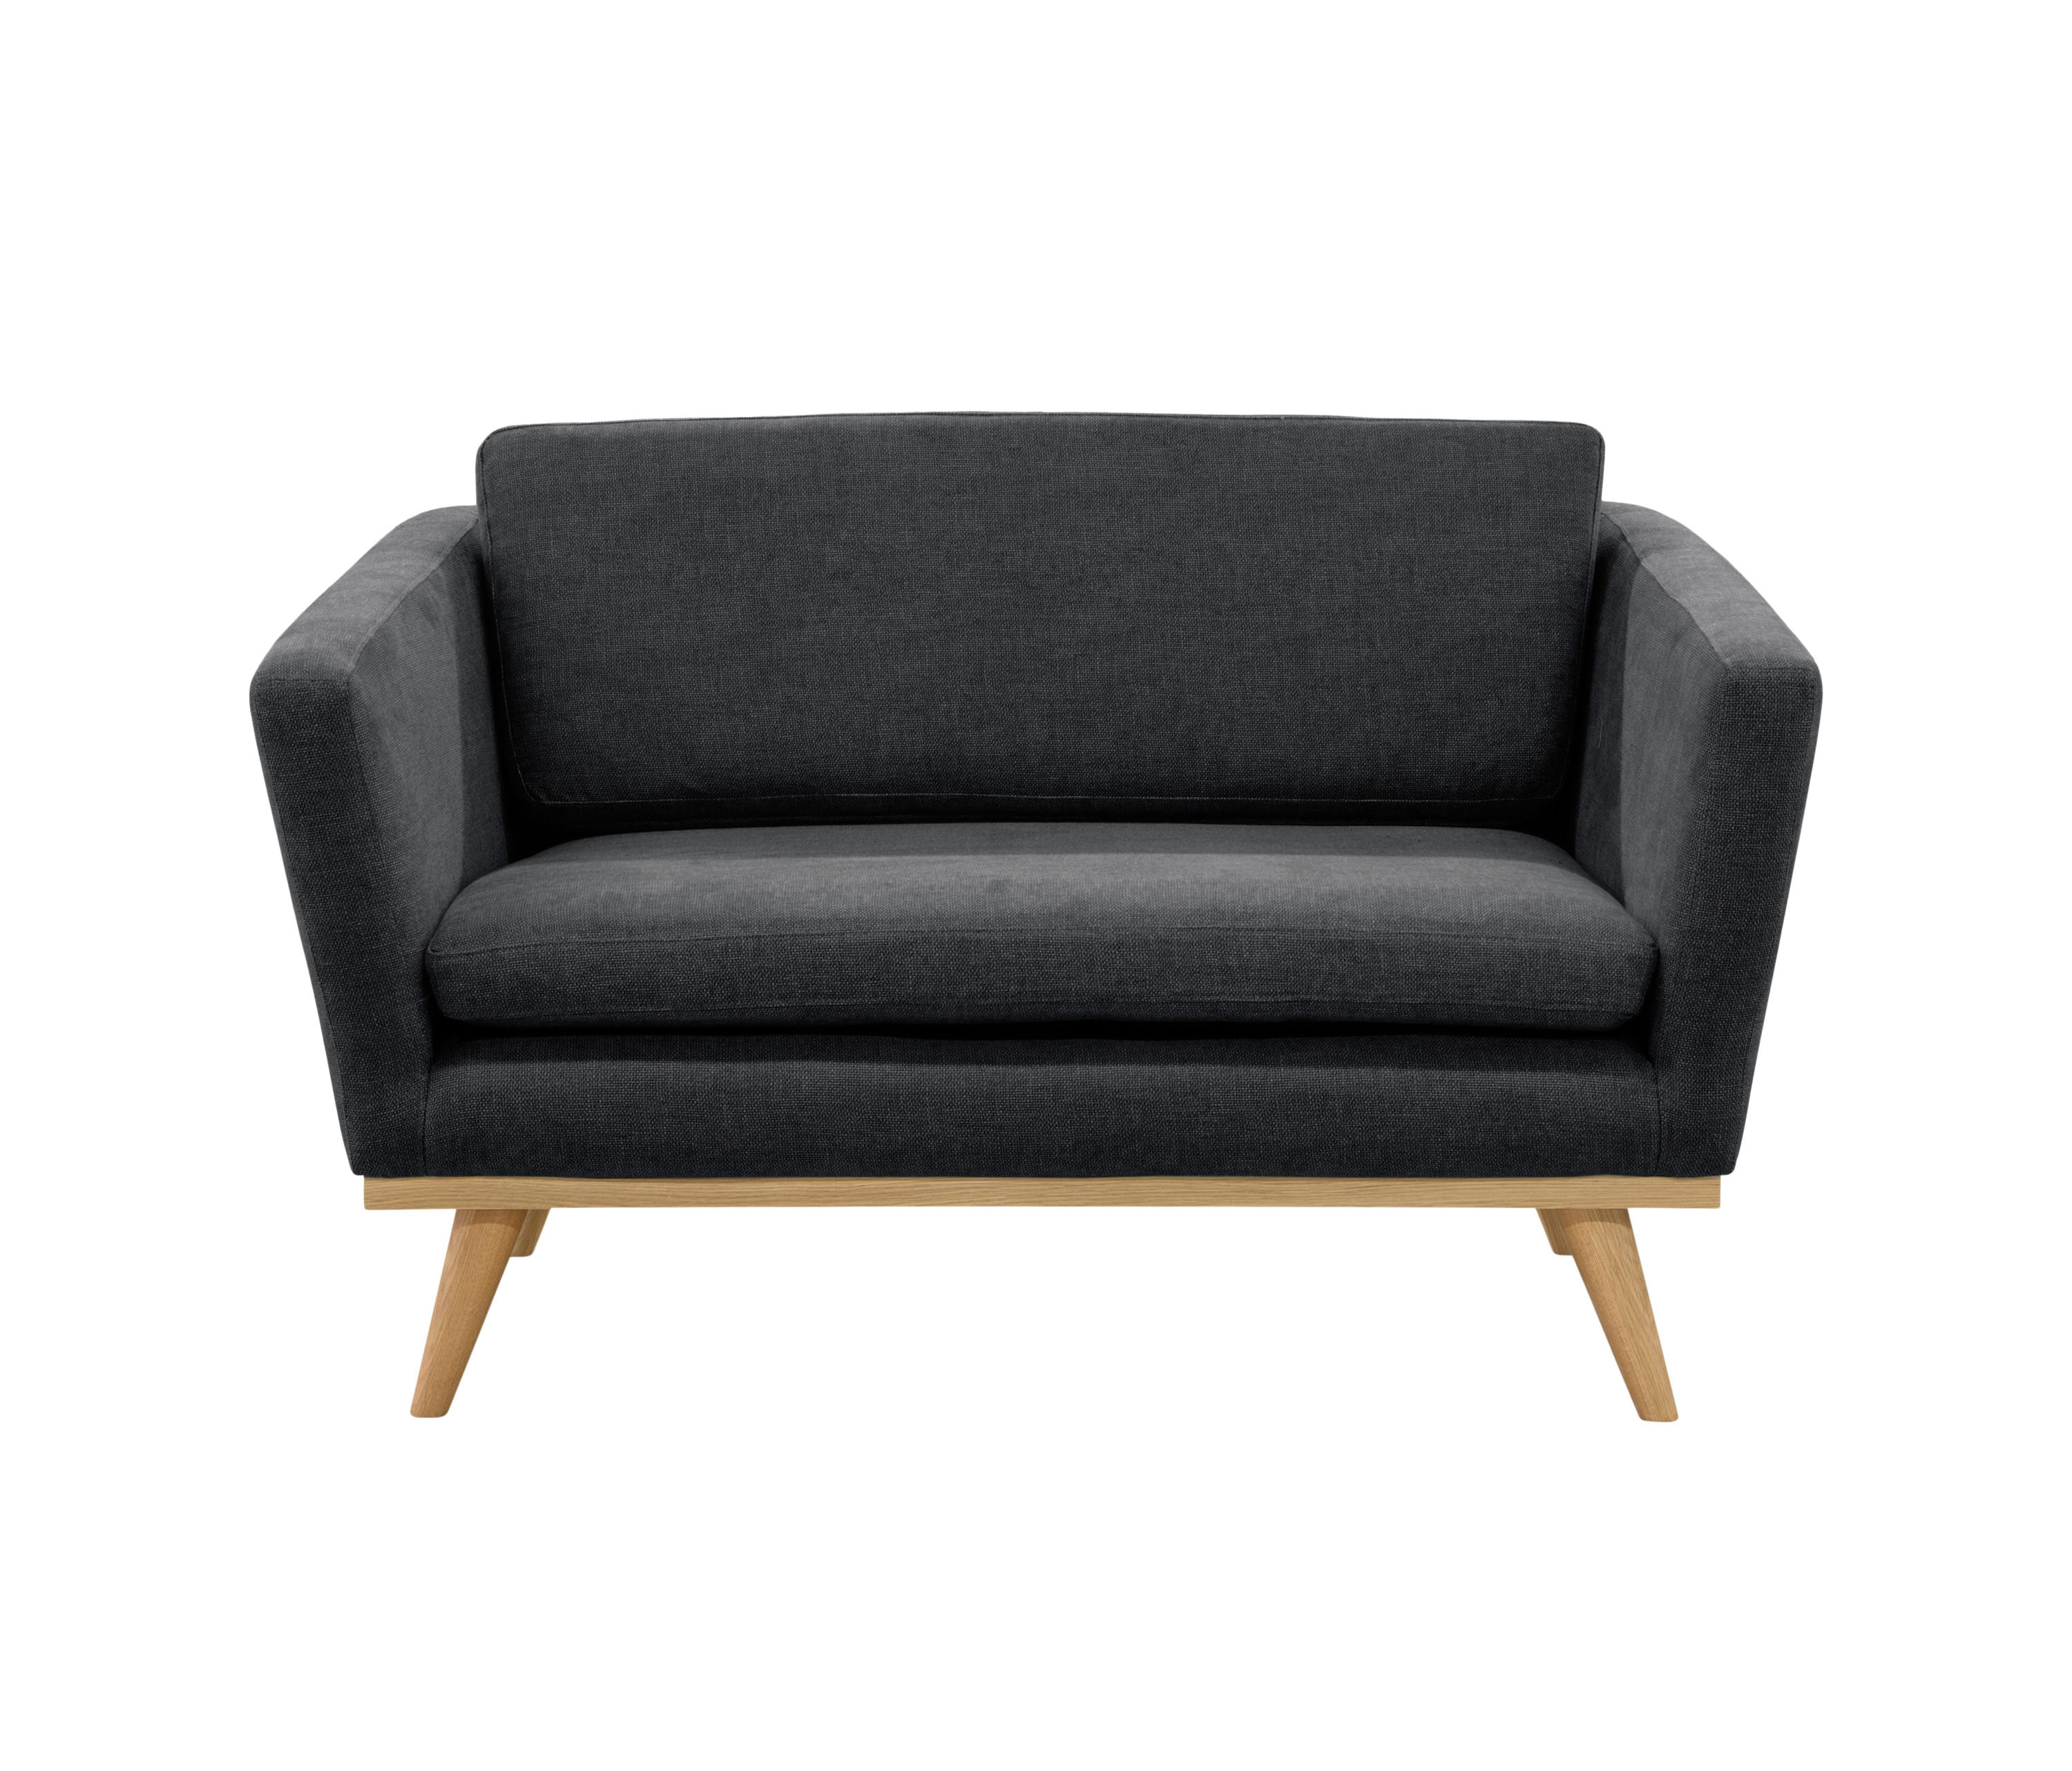 Eddike Simuler talsmand 120 Sofa Chiné & designer furniture | Architonic